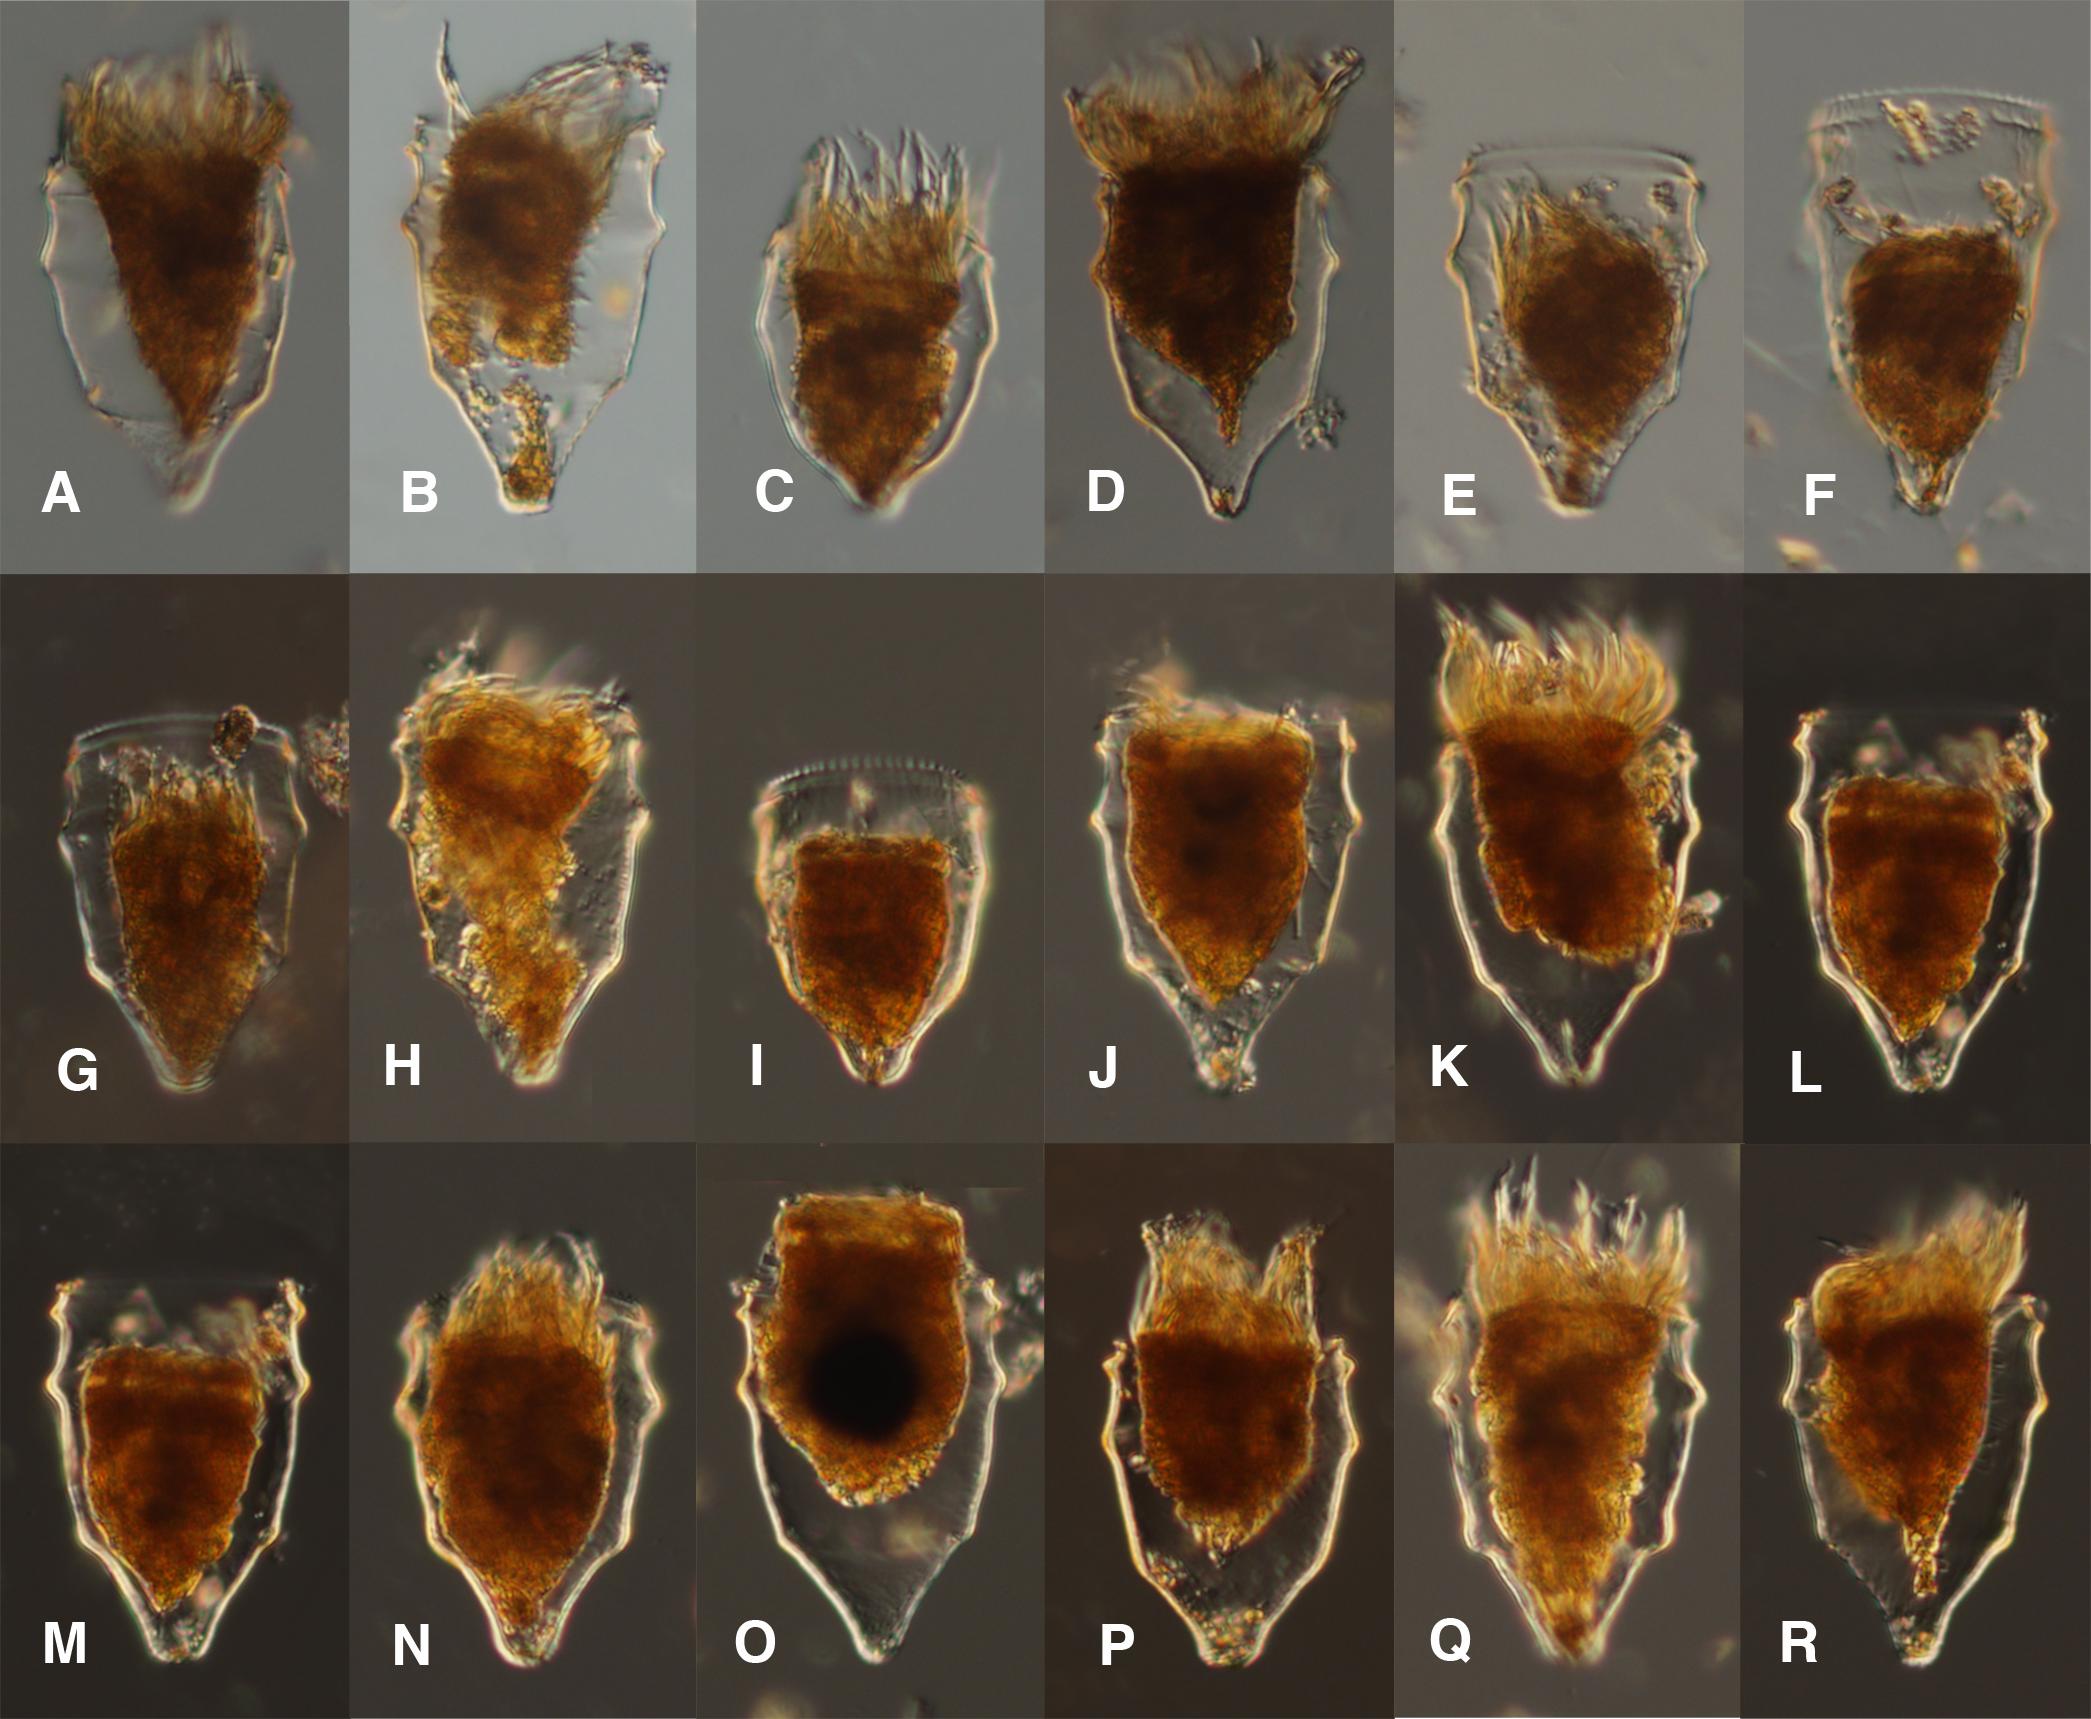 Morphological variability of Ptychocylis obtusa found in a single sample